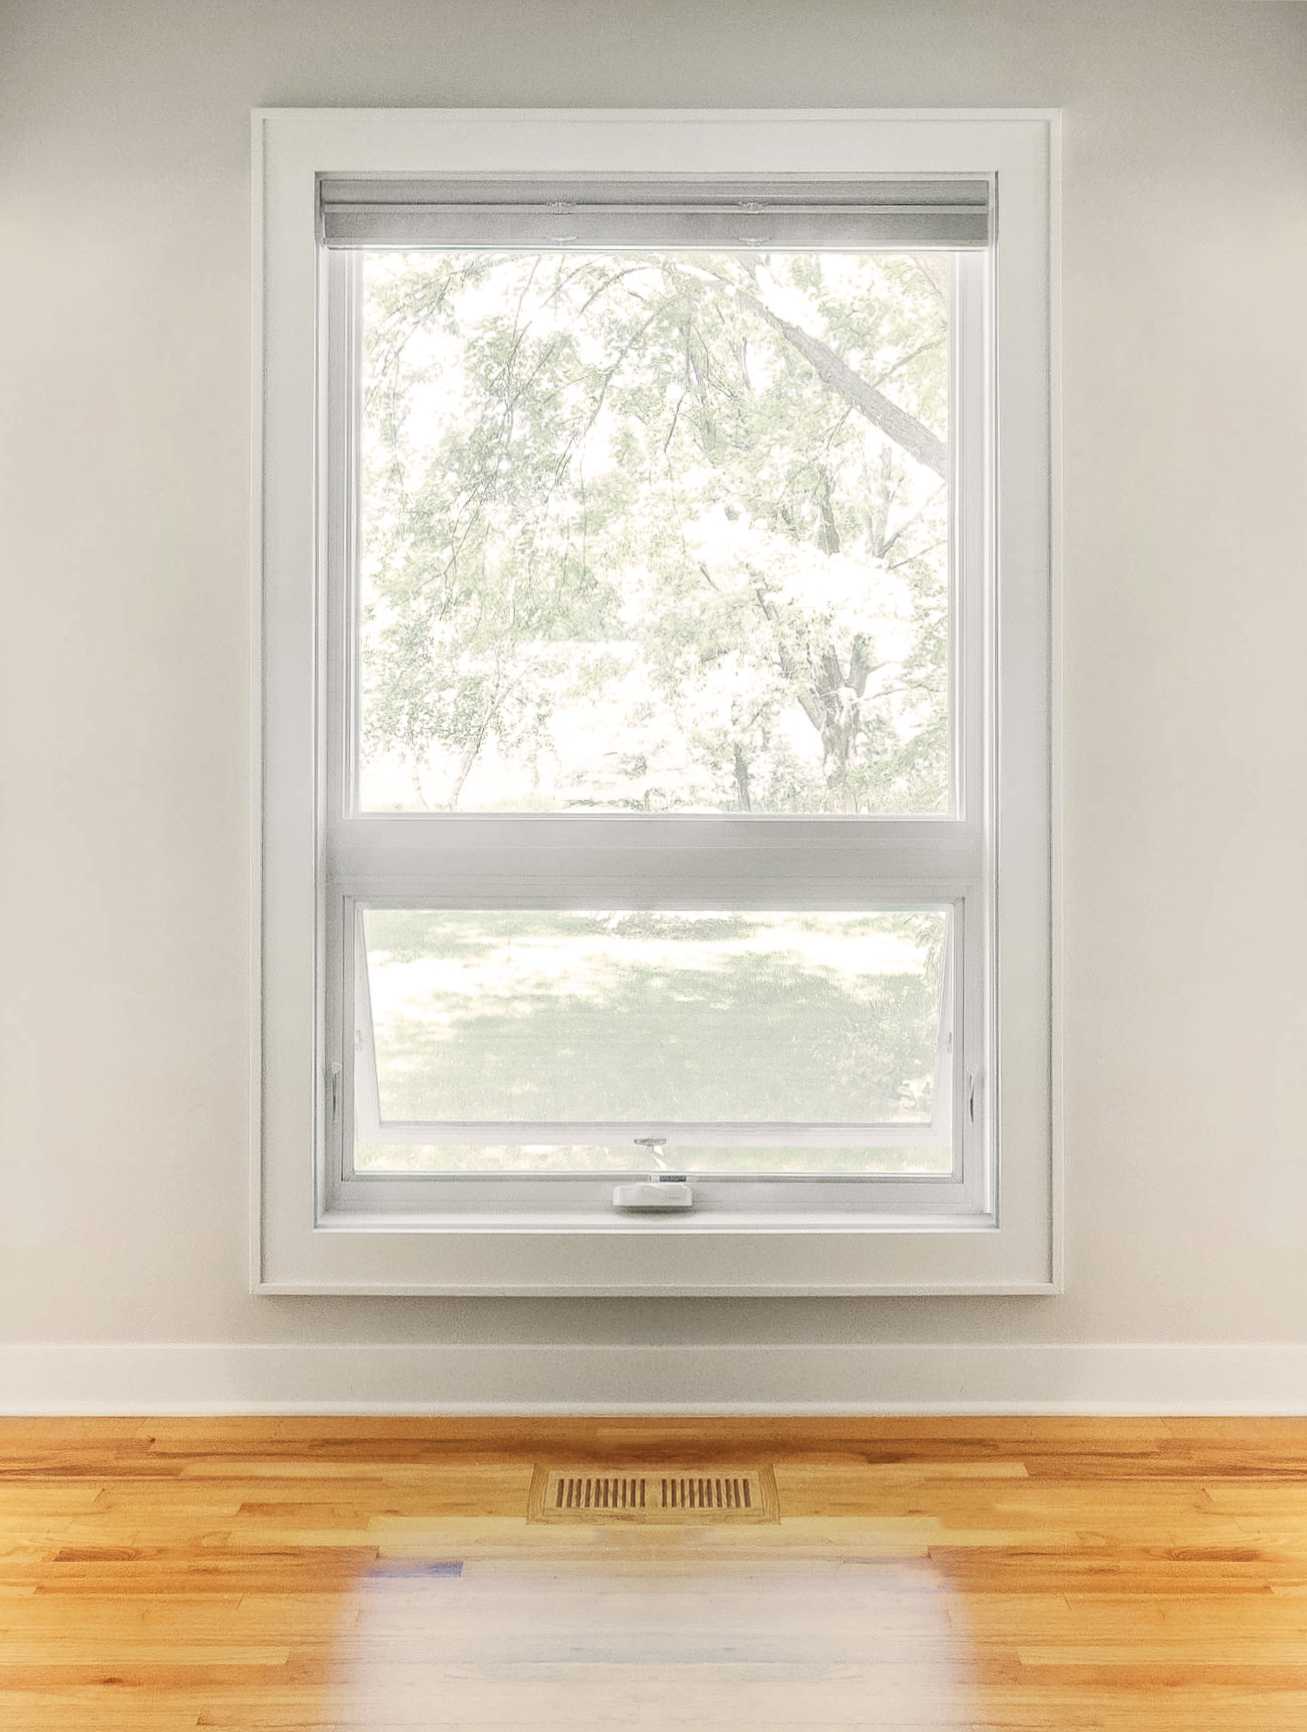 A white awning window